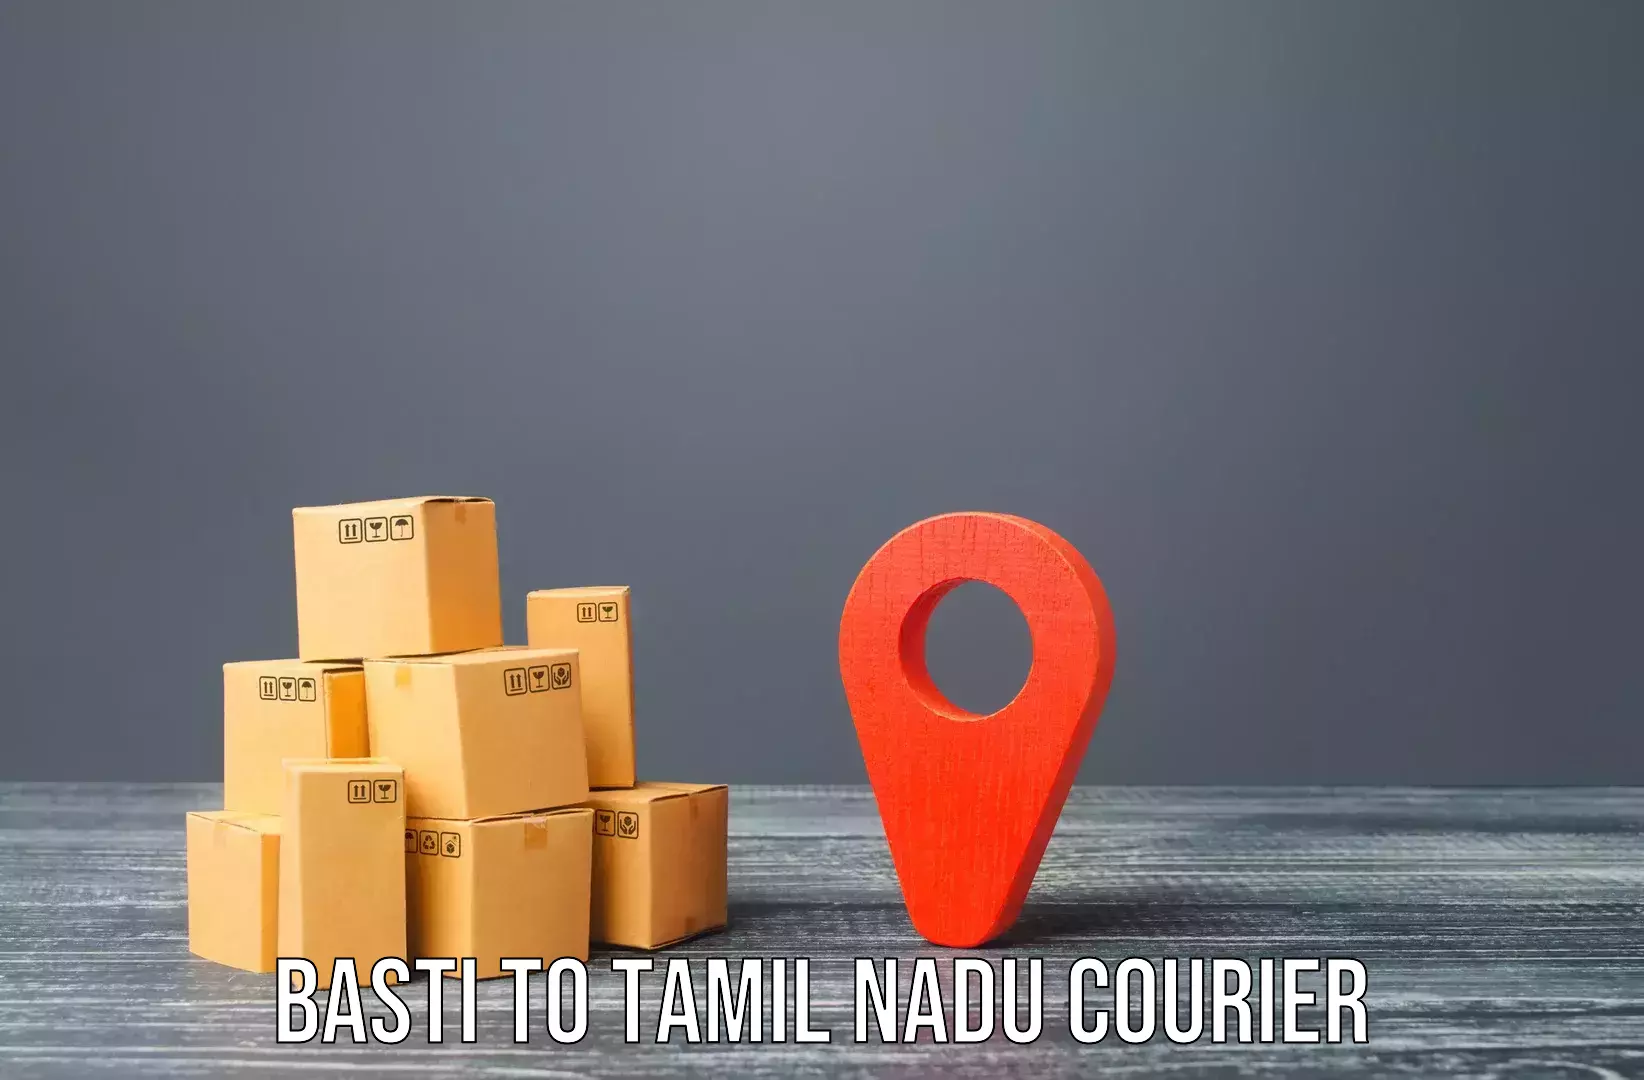 Efficient moving company Basti to Periyakulam